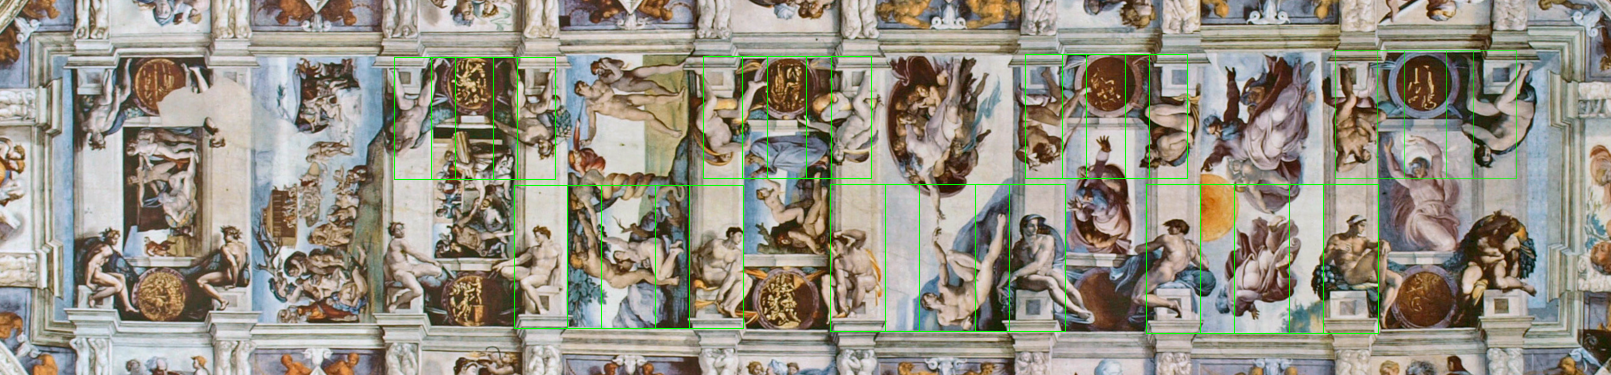 Michelangelo And The Art Of The Golden Ratio In Design